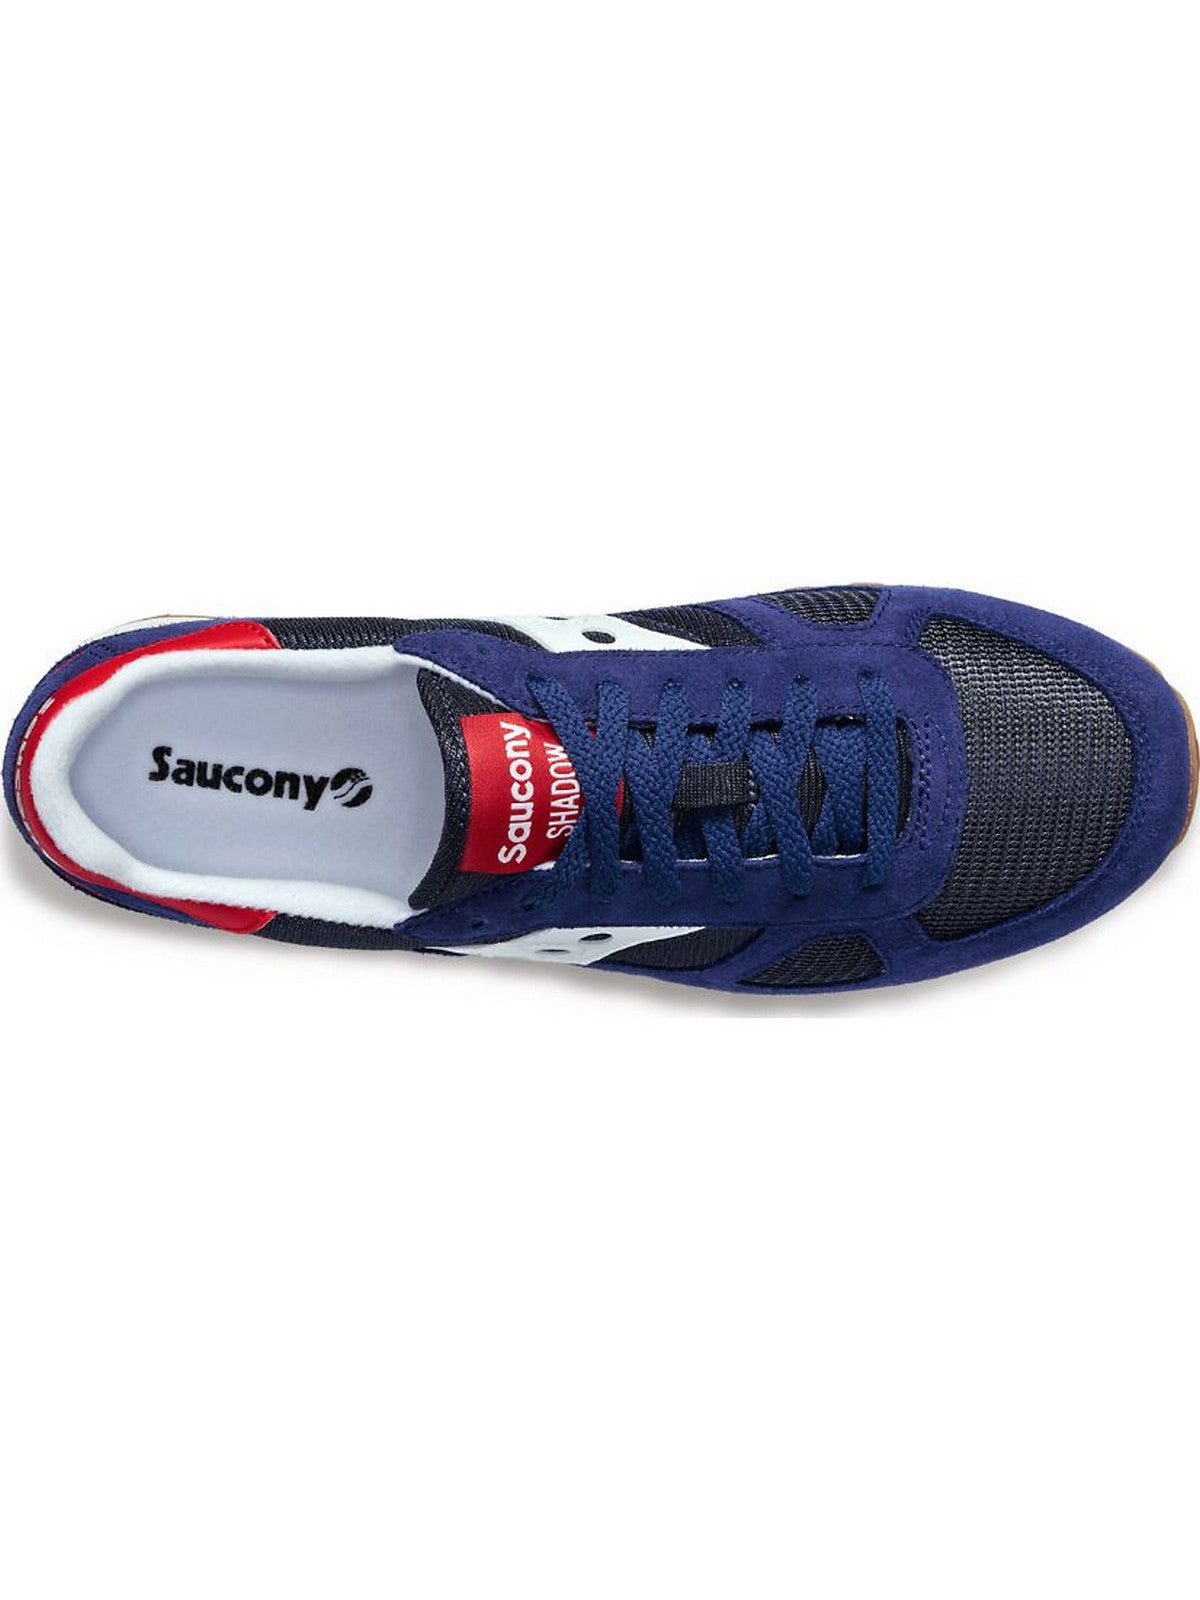 SAUCONY Sneaker Uomo Shadow original S2108-851 Blu